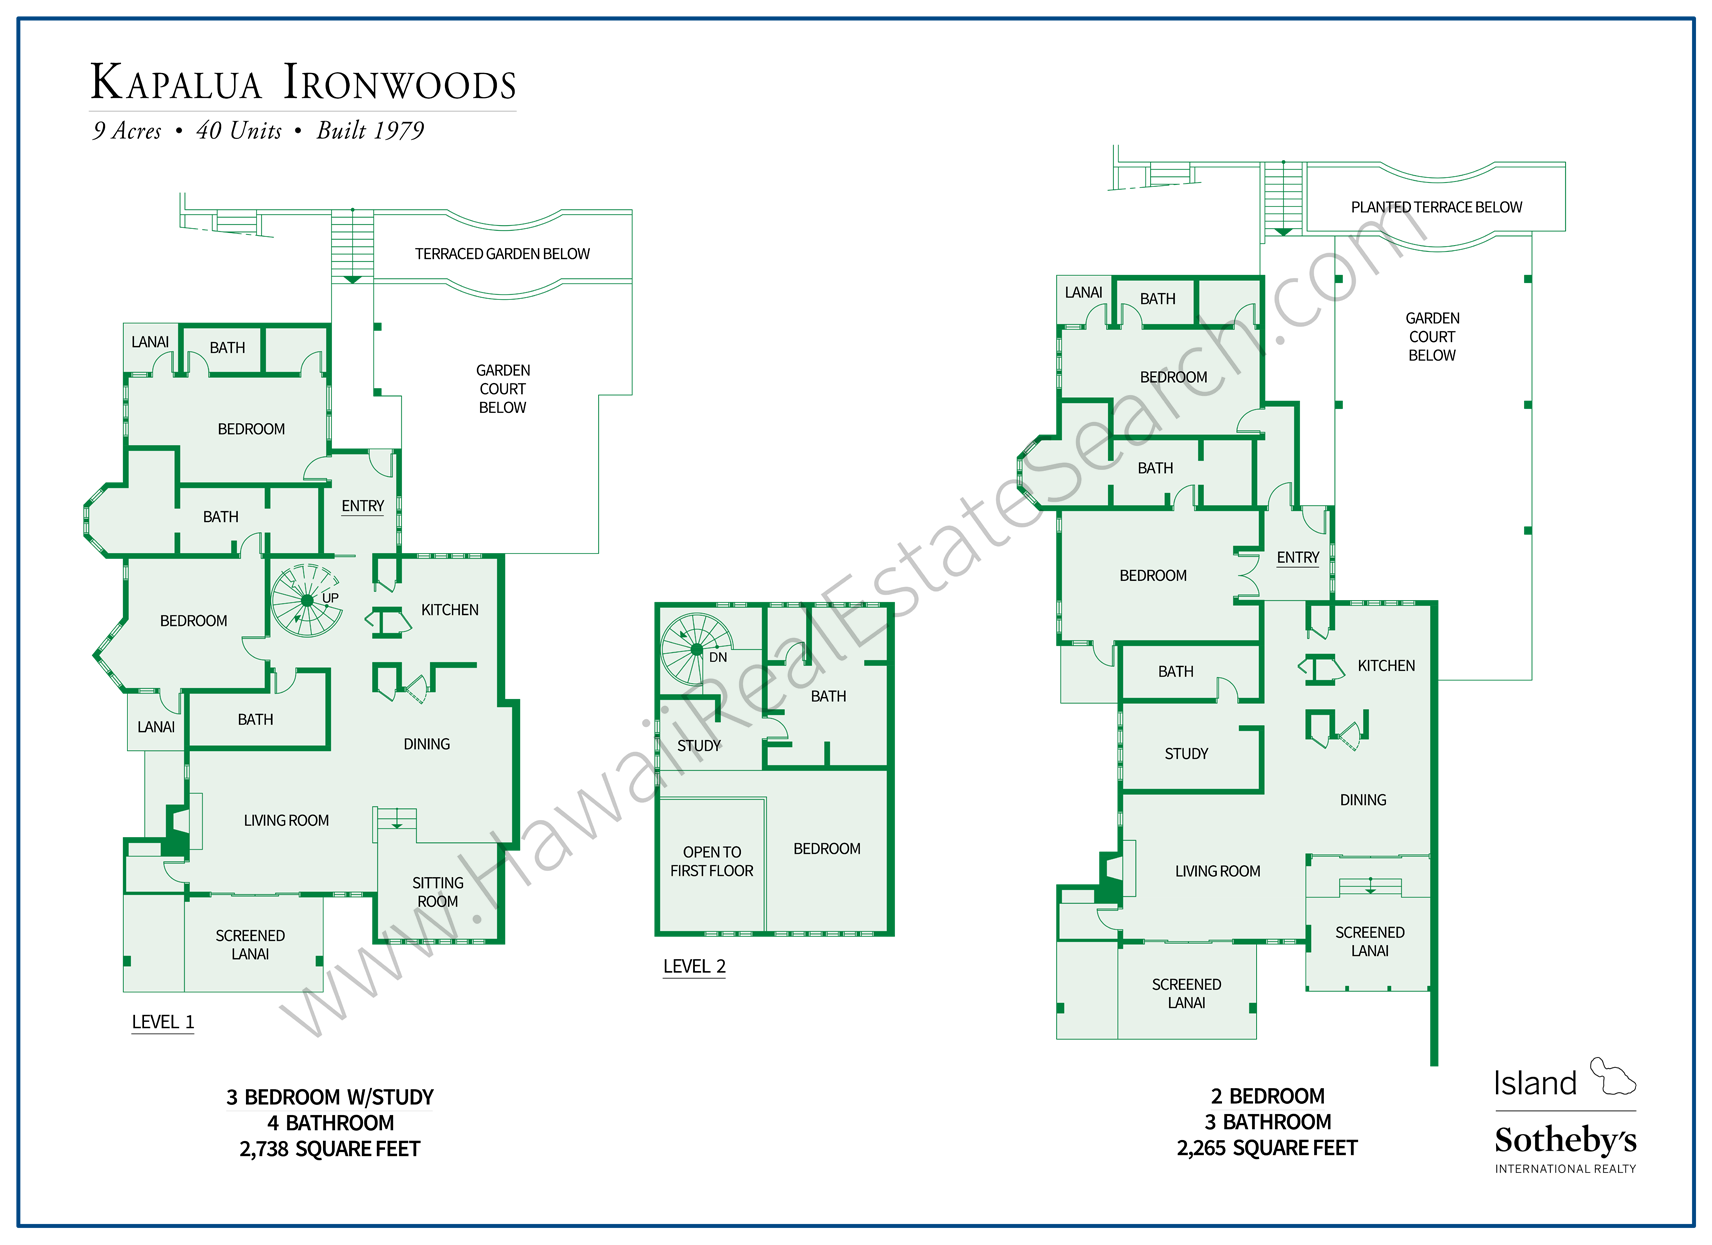 kapalua ironwoods floor plan 3 bedroom